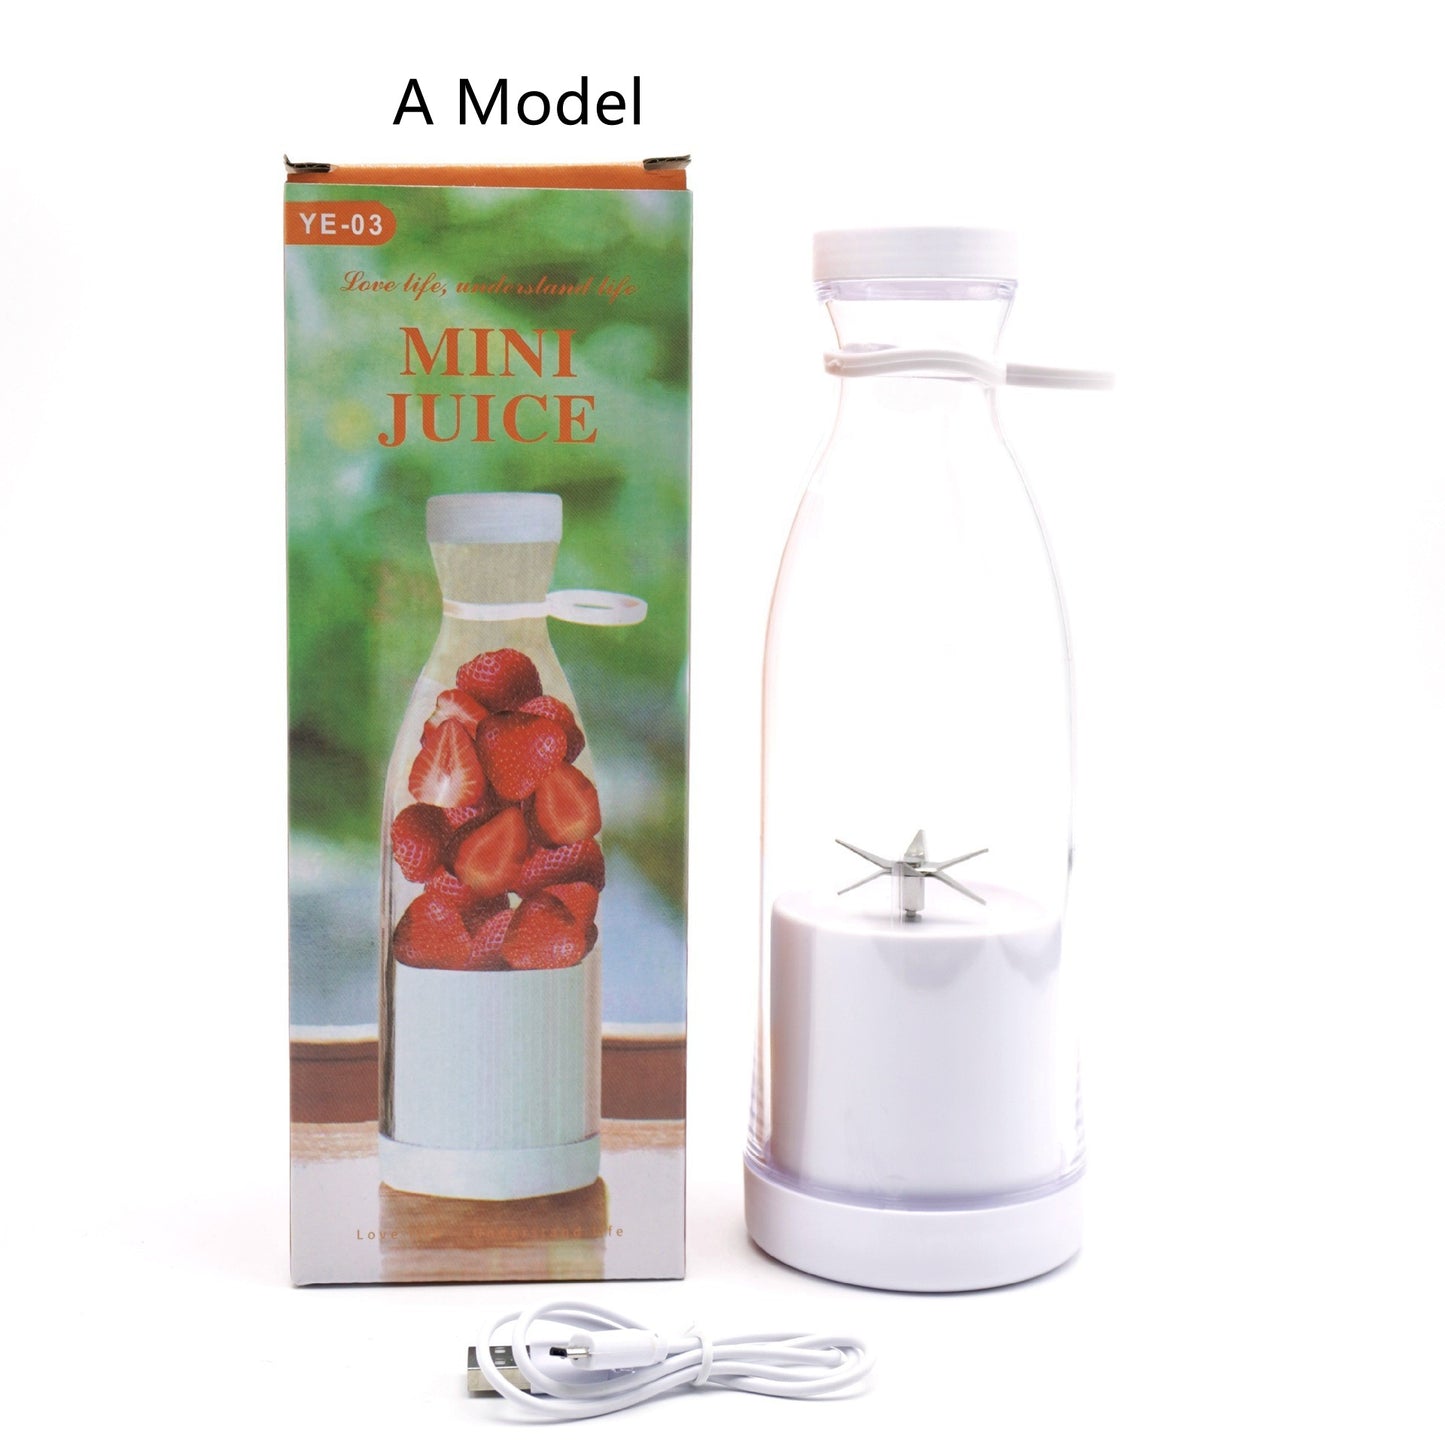 Electric USB Wine Bottle Juicer Cup 6-leaf Cutter Head Household